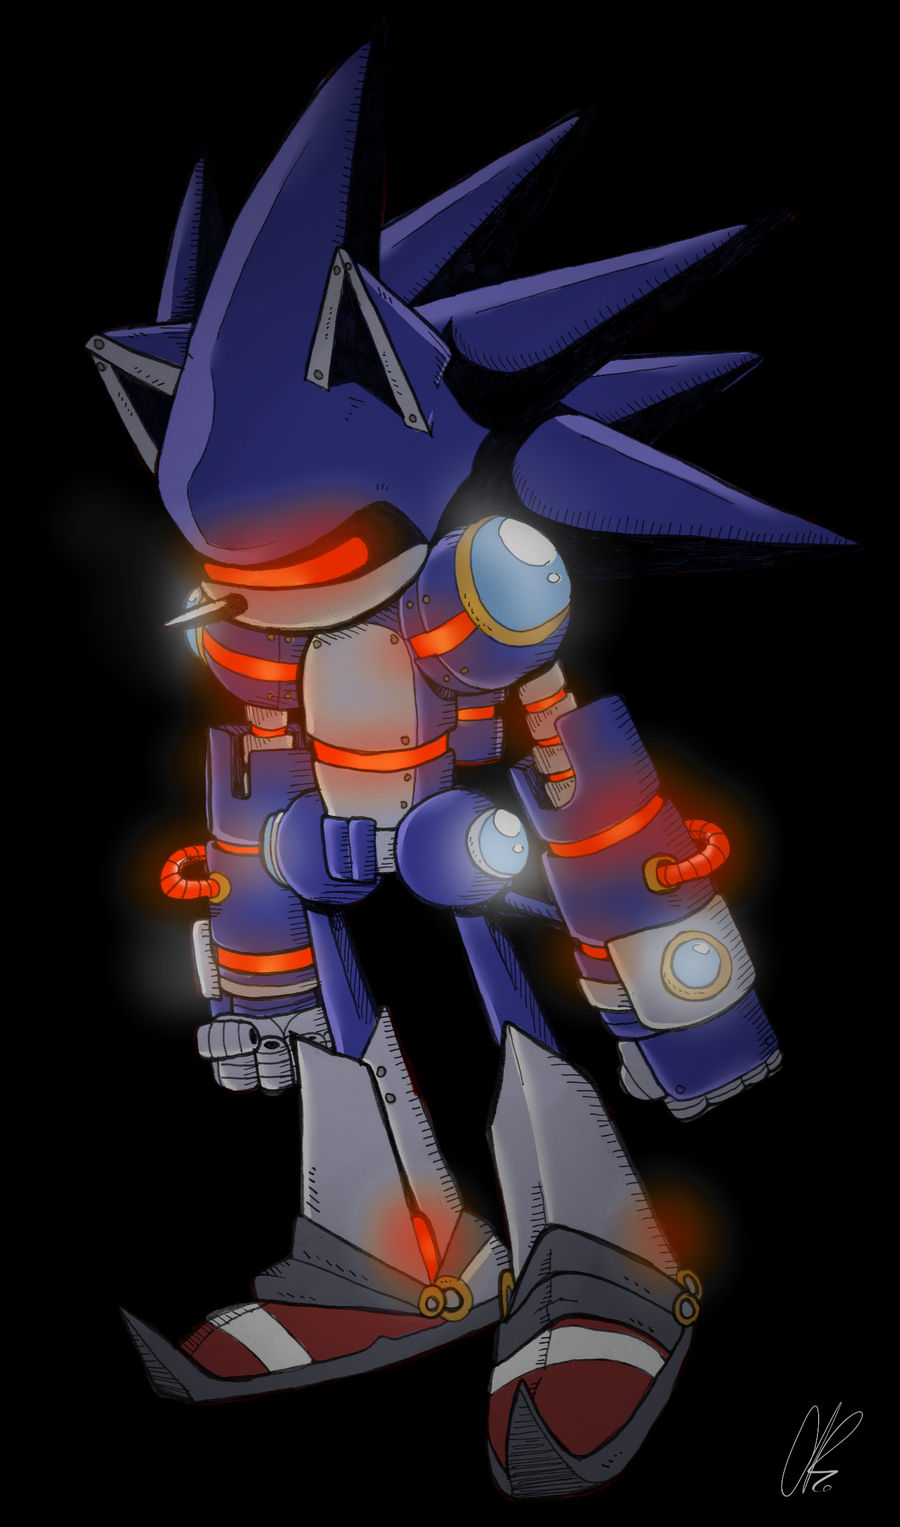 Silver Sonic MK 3 by NextGrandcross on DeviantArt